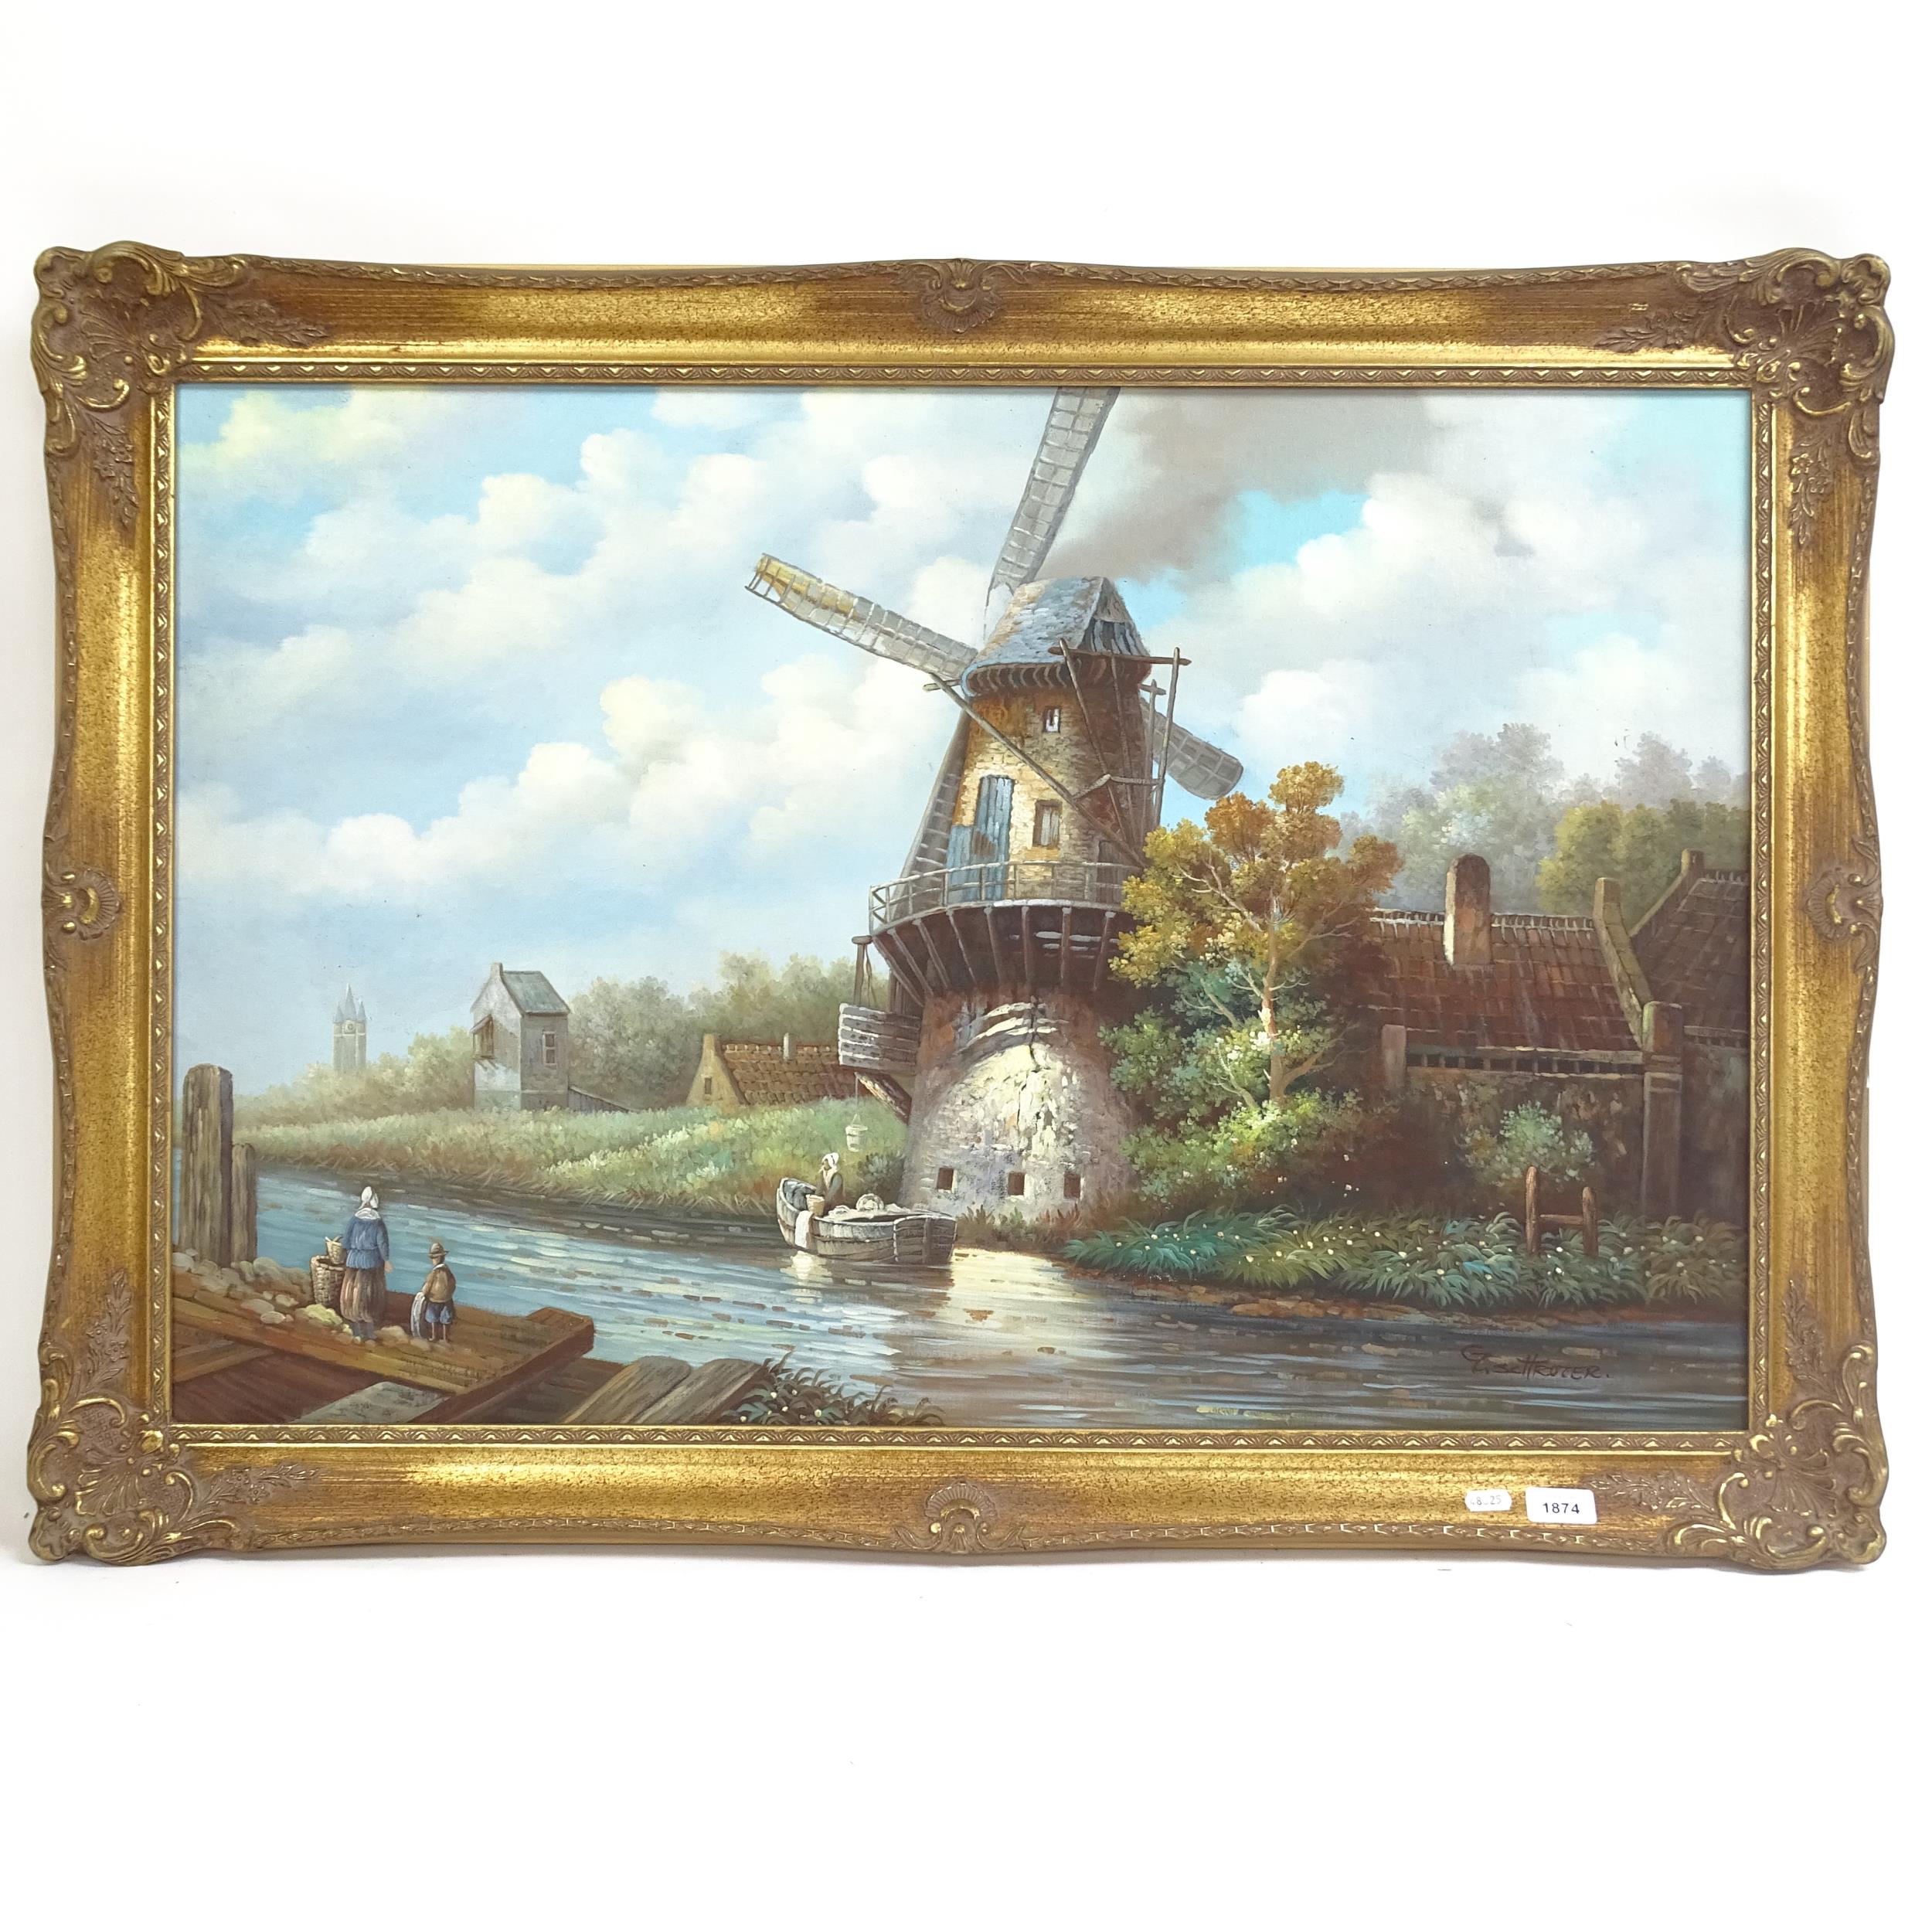 Schroter, modern oleograph on board, Dutch windmill, overall 73cm x 103cm, gilt-framed